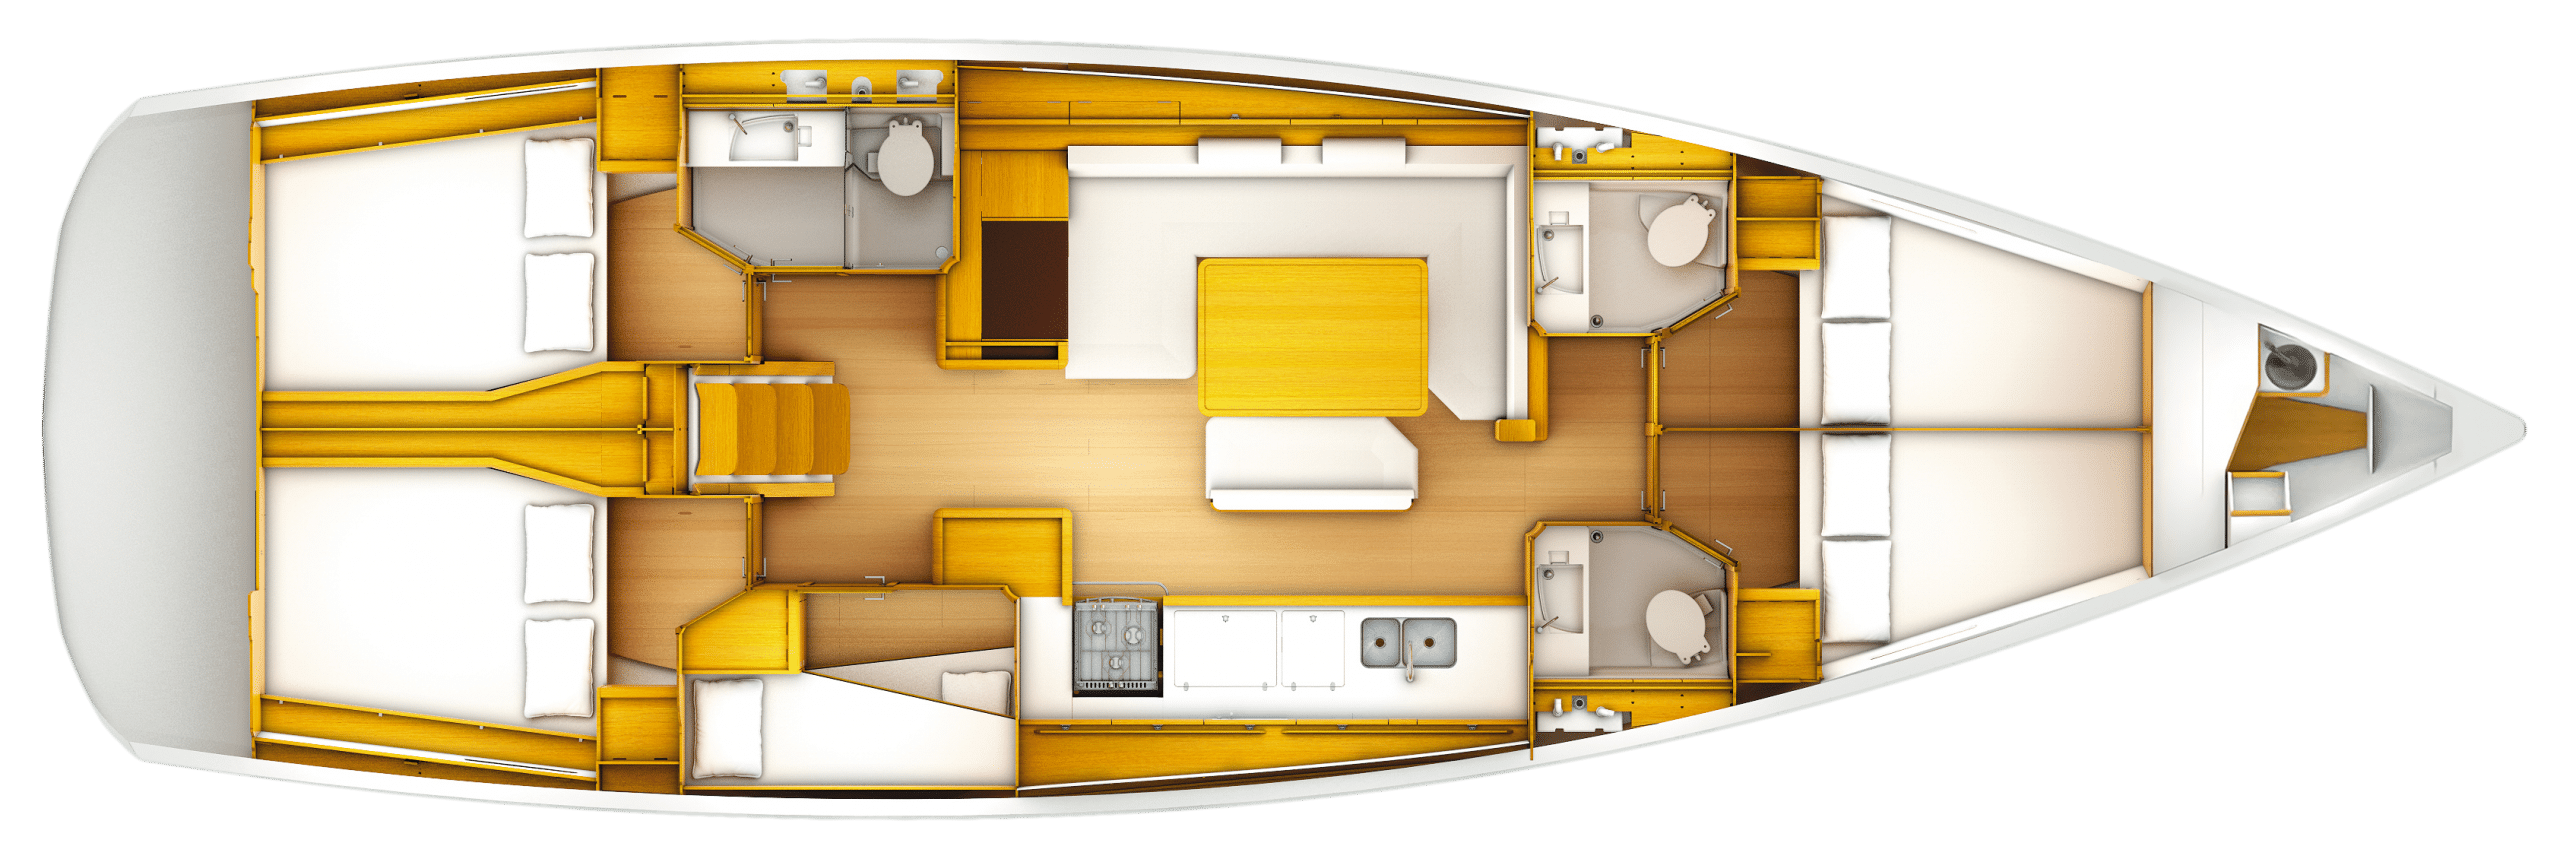 jeanneau-sun-odyssey-509-layout-5-cabins-3-heads-skipper-cabin